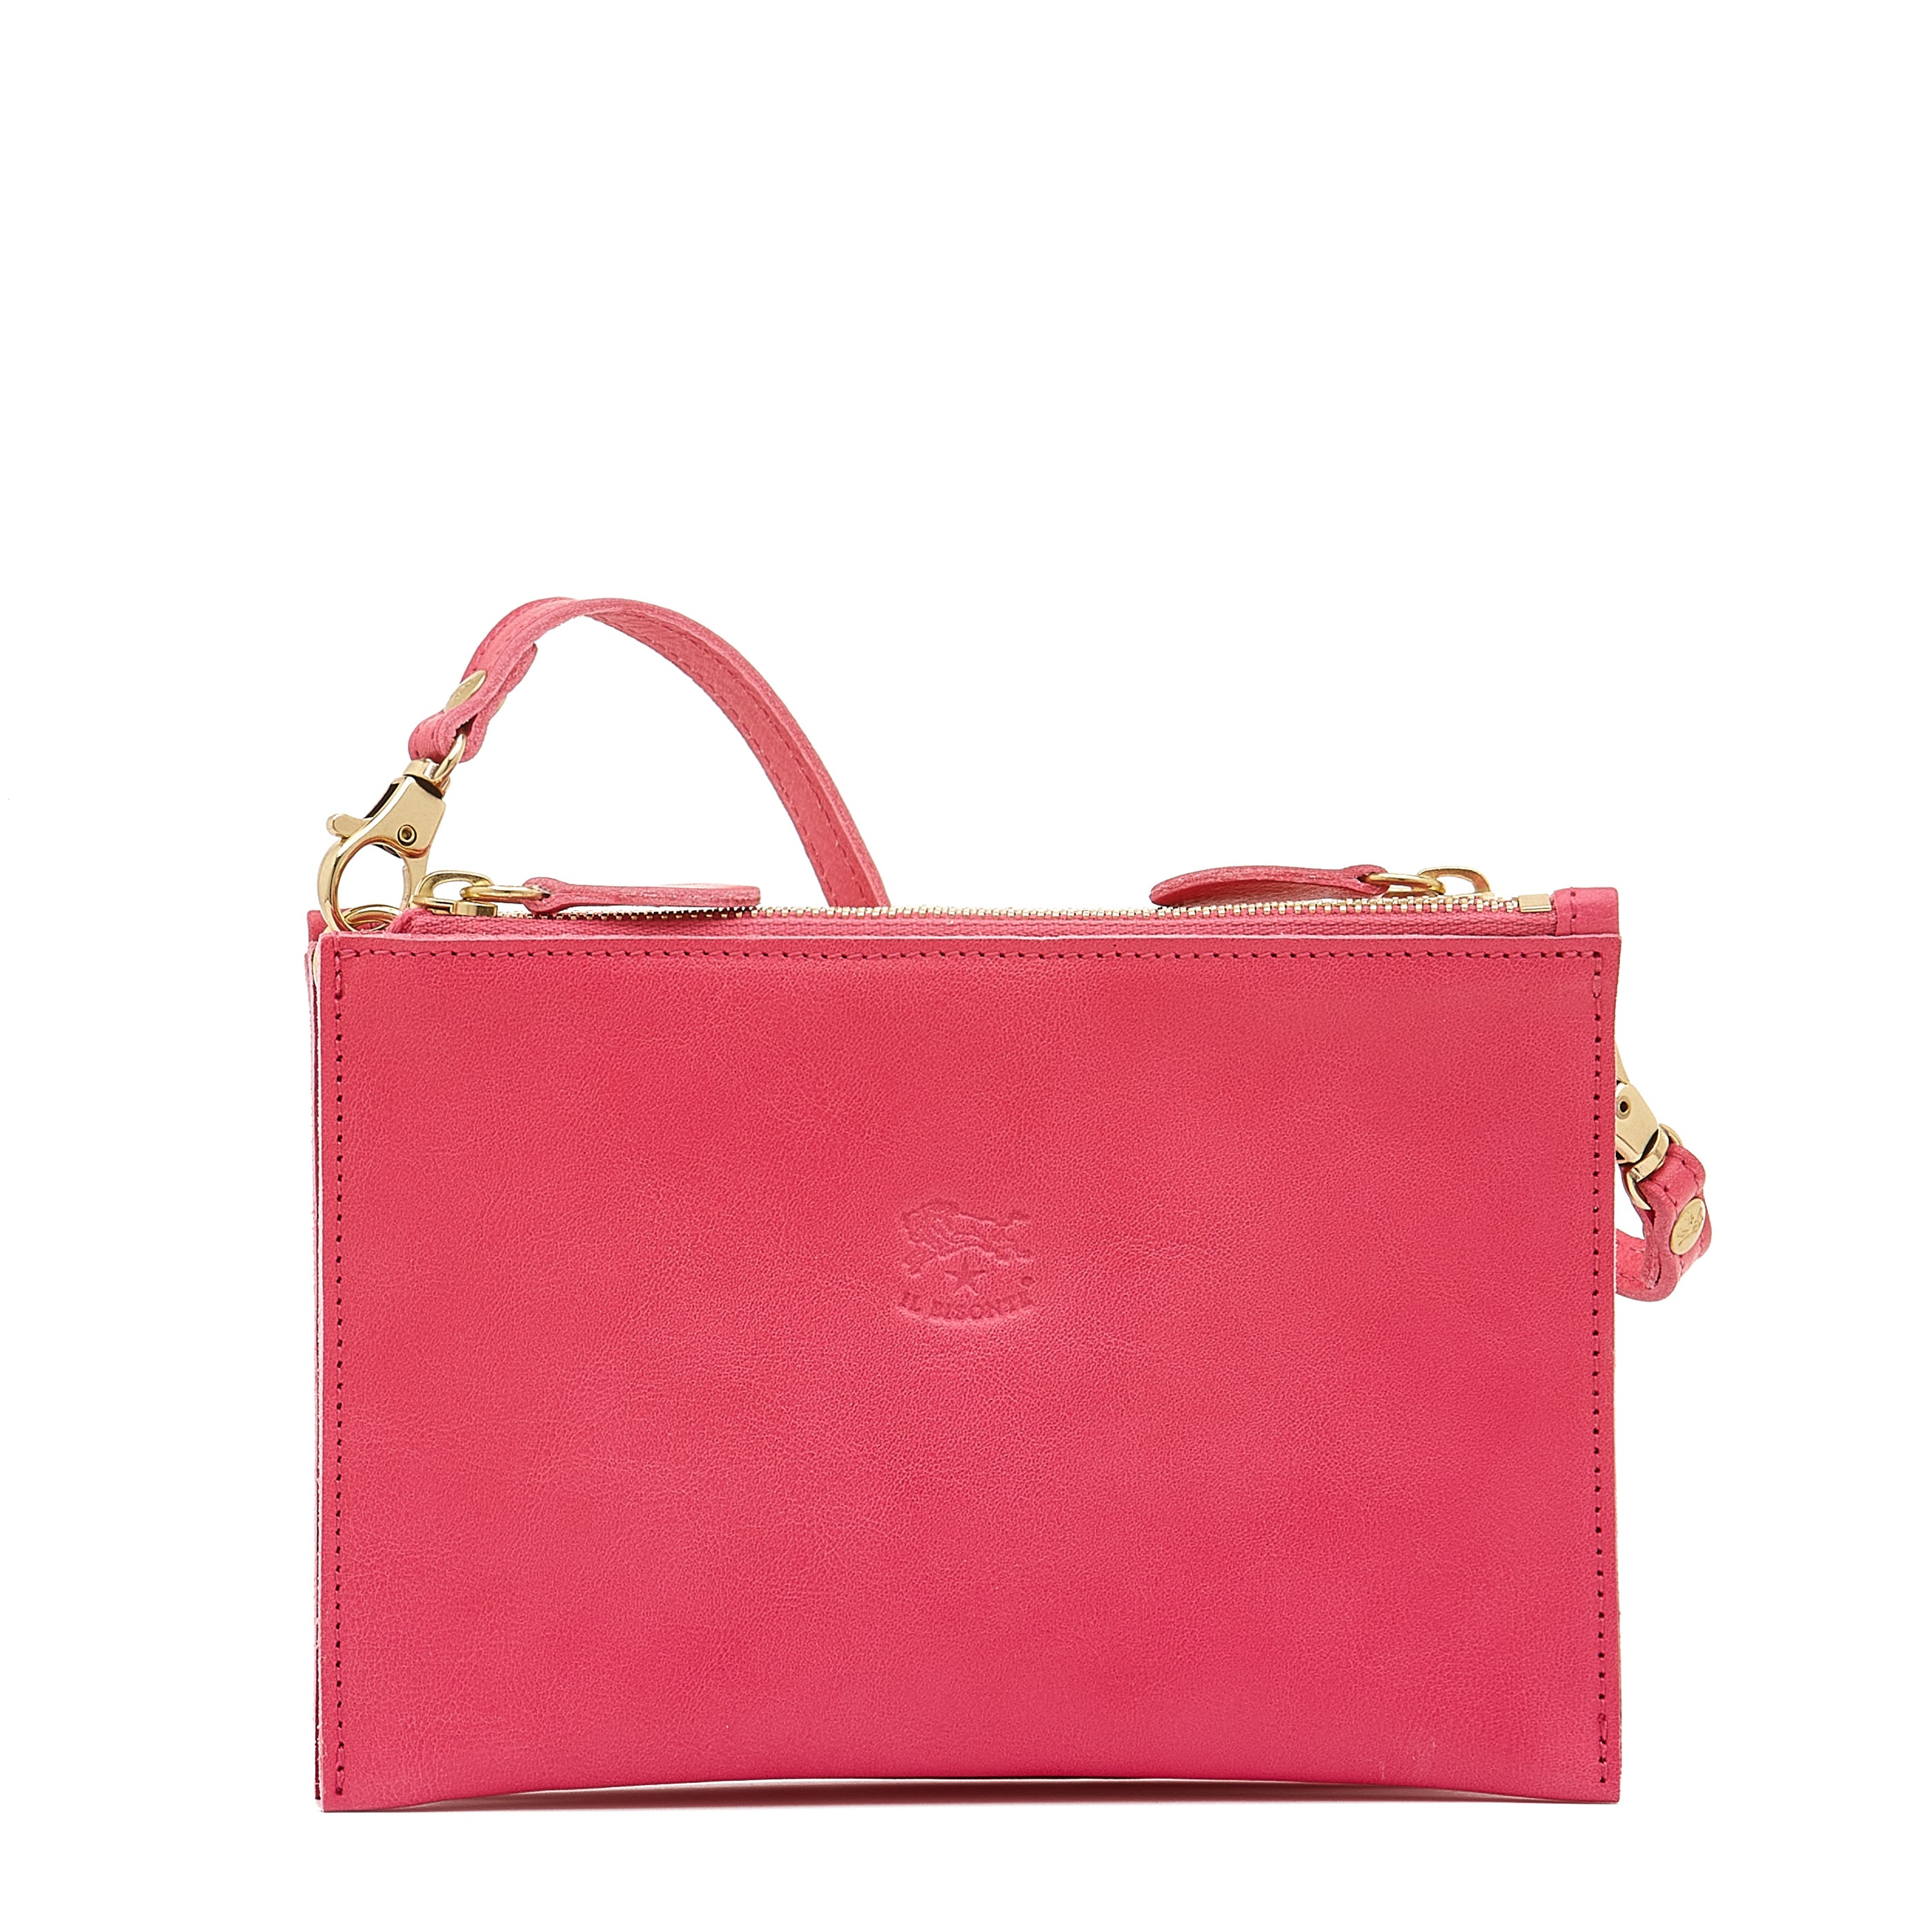 Talamone | Women's clutch bag in leather color azalea